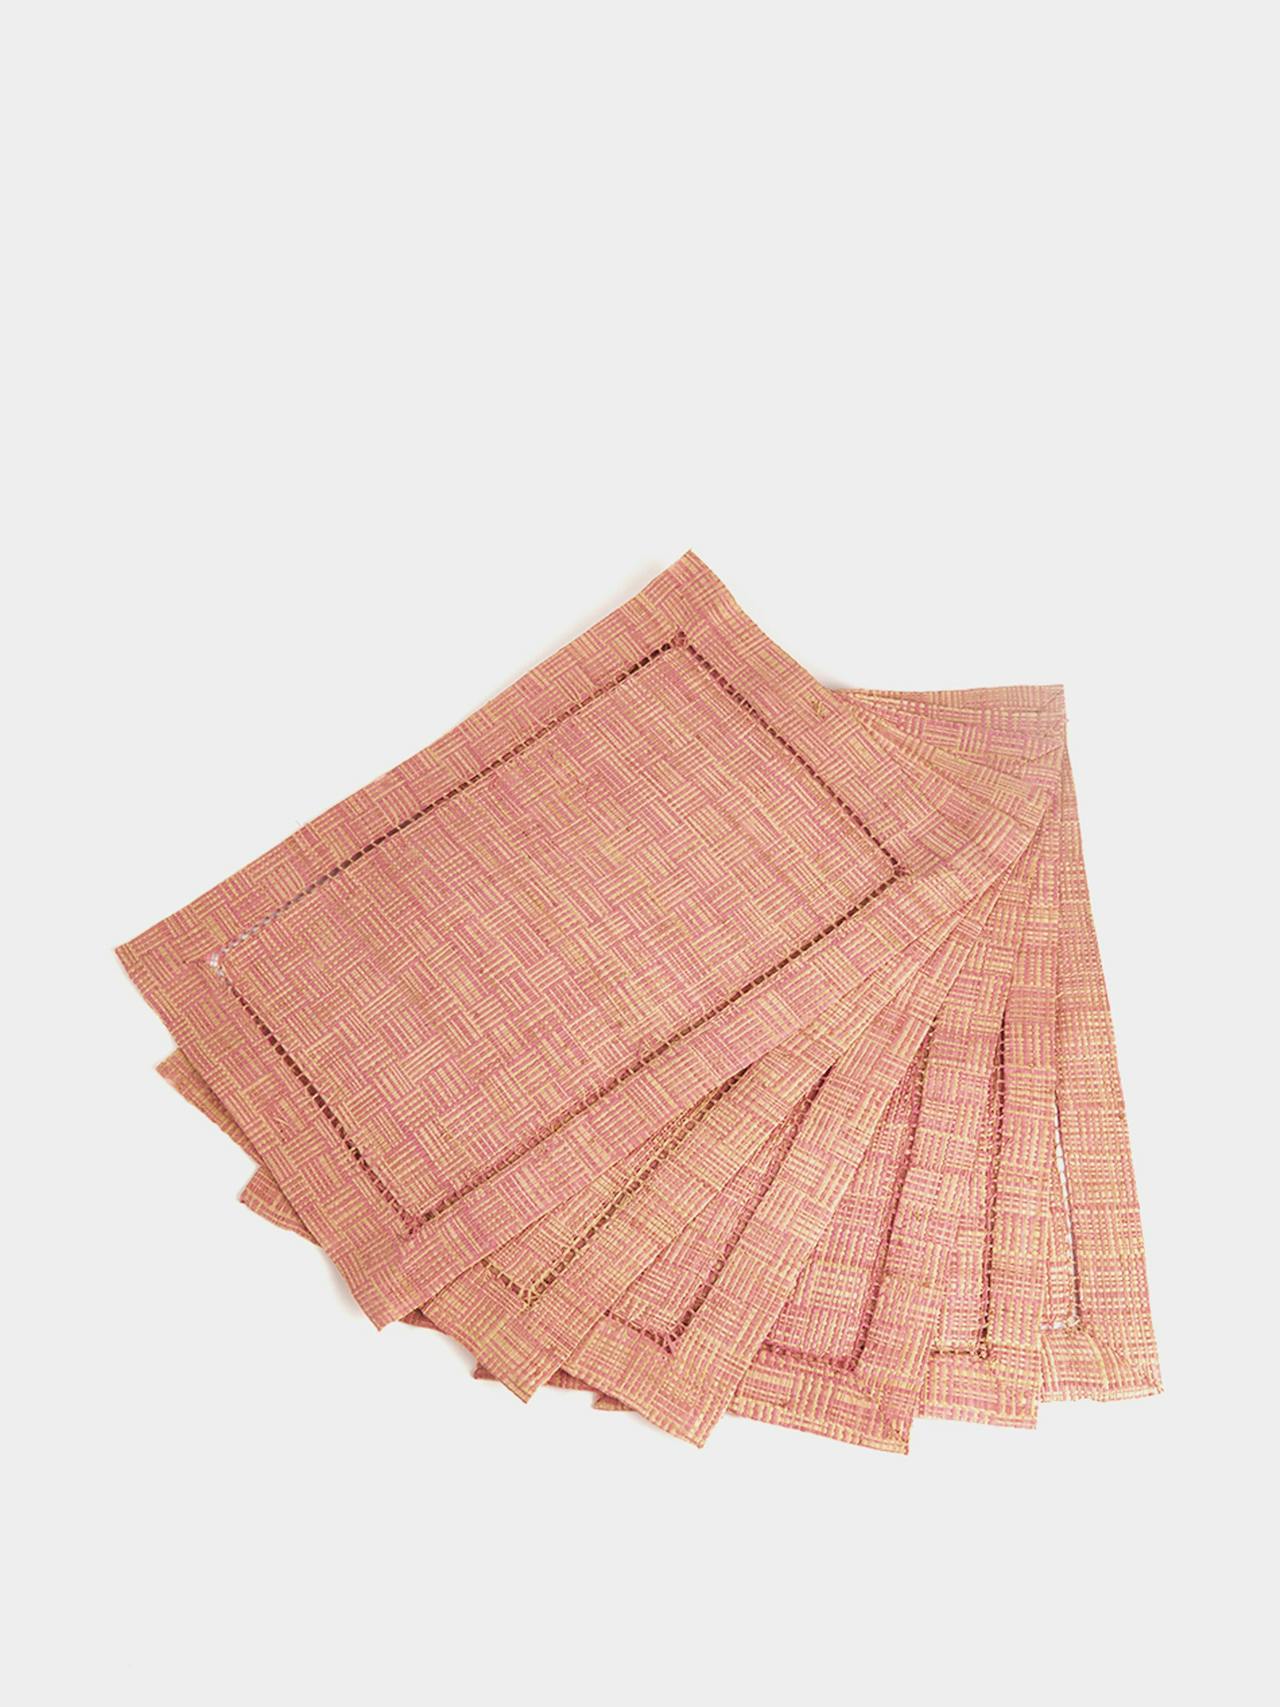 Pink raffia placemats, set of 6